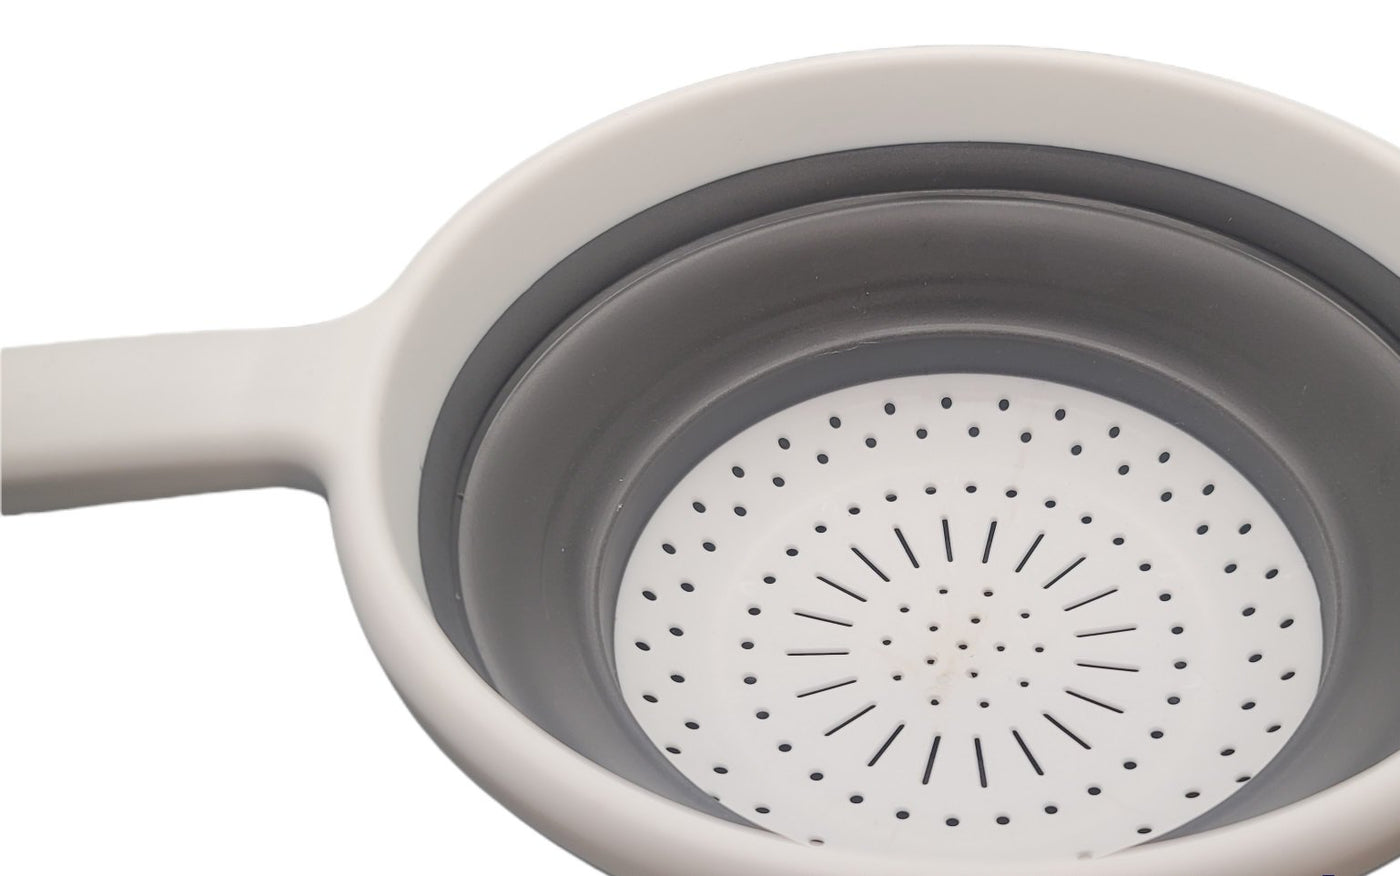 Handy Housewares 10 Round Vented Microwave Splatter Guard Food Bowl C